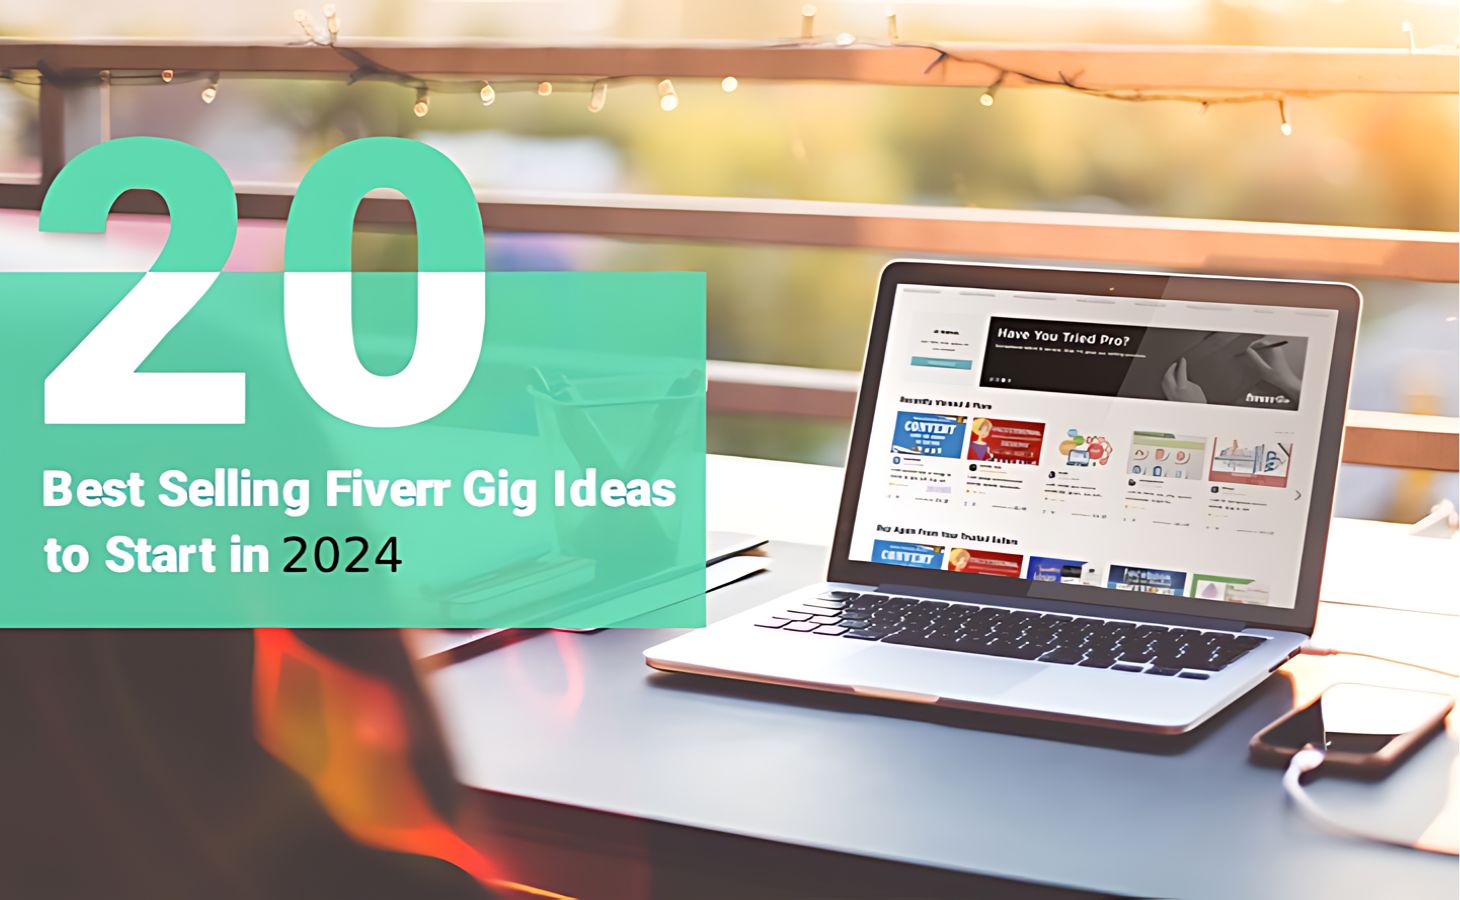 Best selling fiverr gig ideas to start in 2024